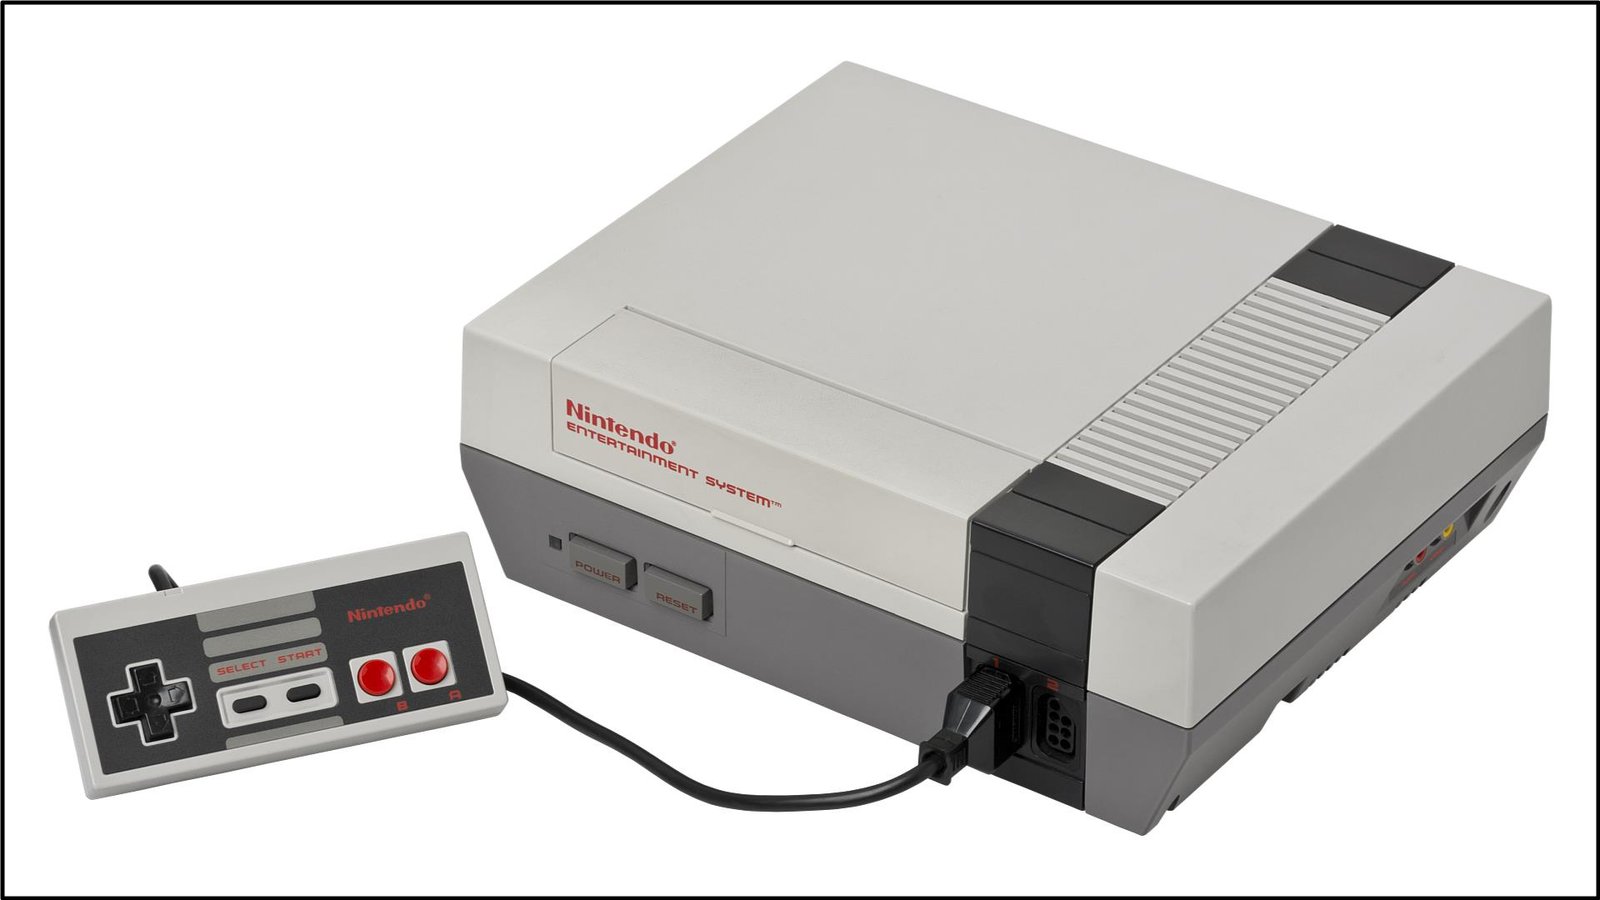 1 – Nintendo Entertainment System NES